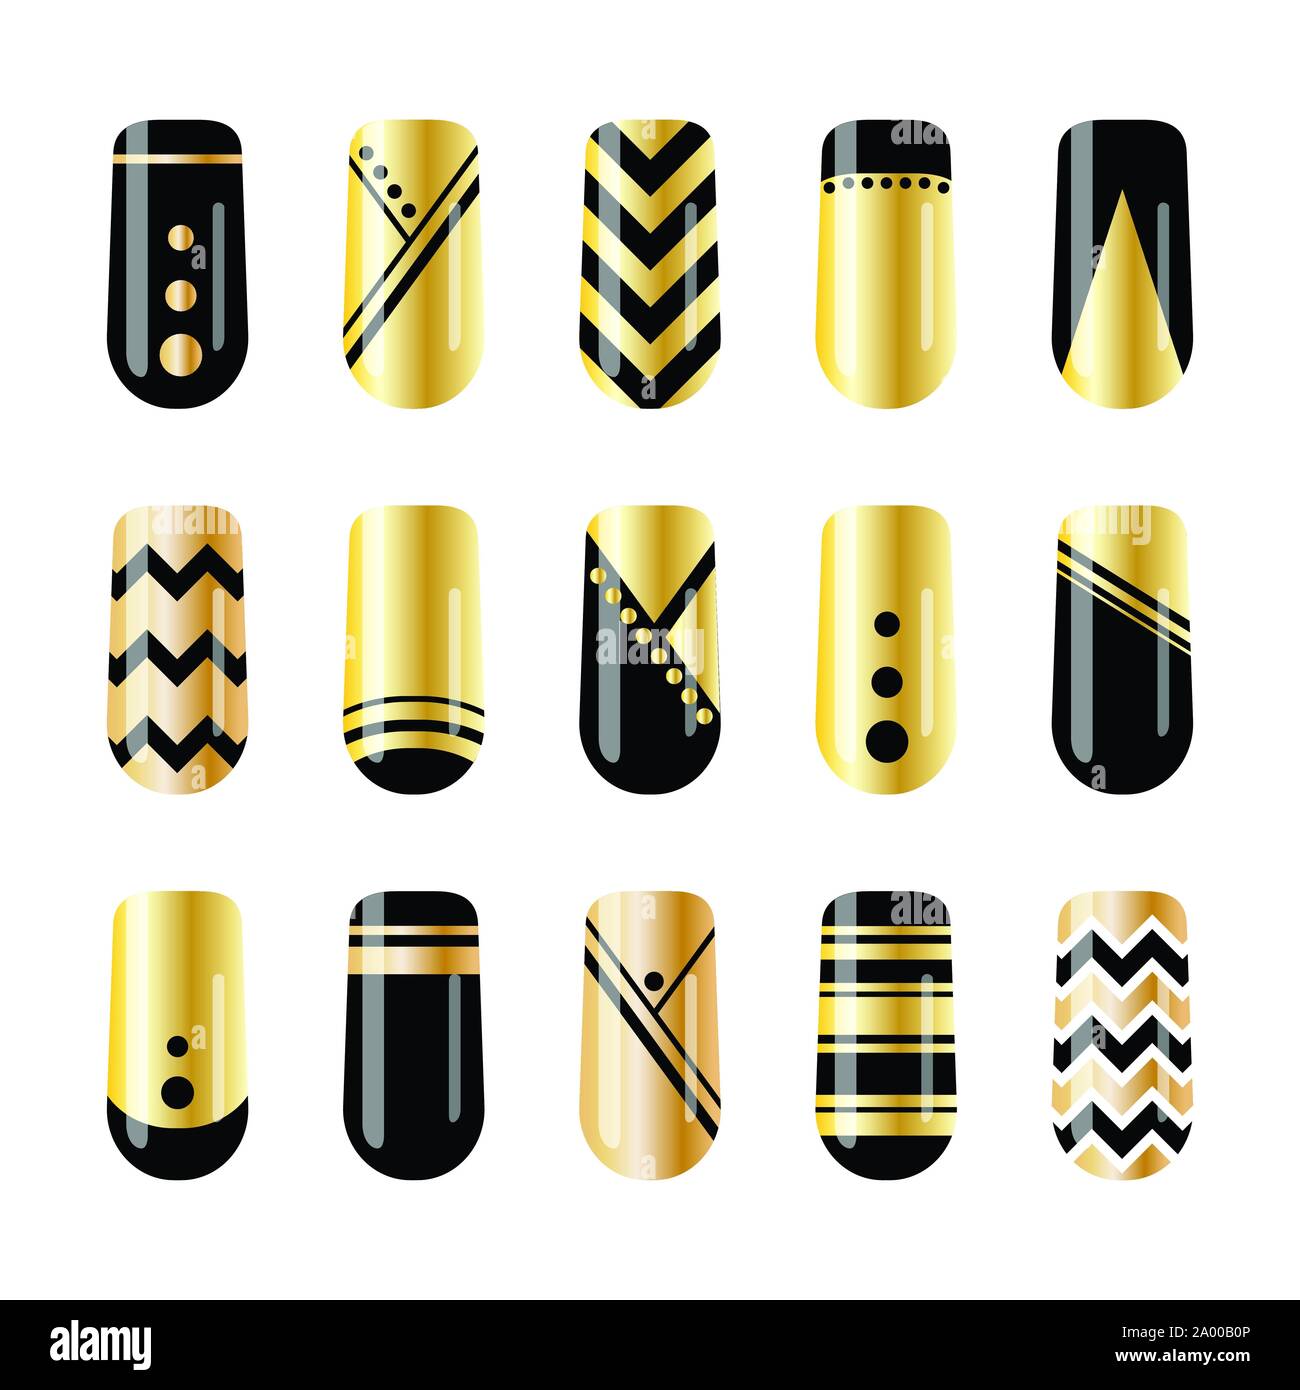 nail art gold and black nail stickers design 2A00B0P